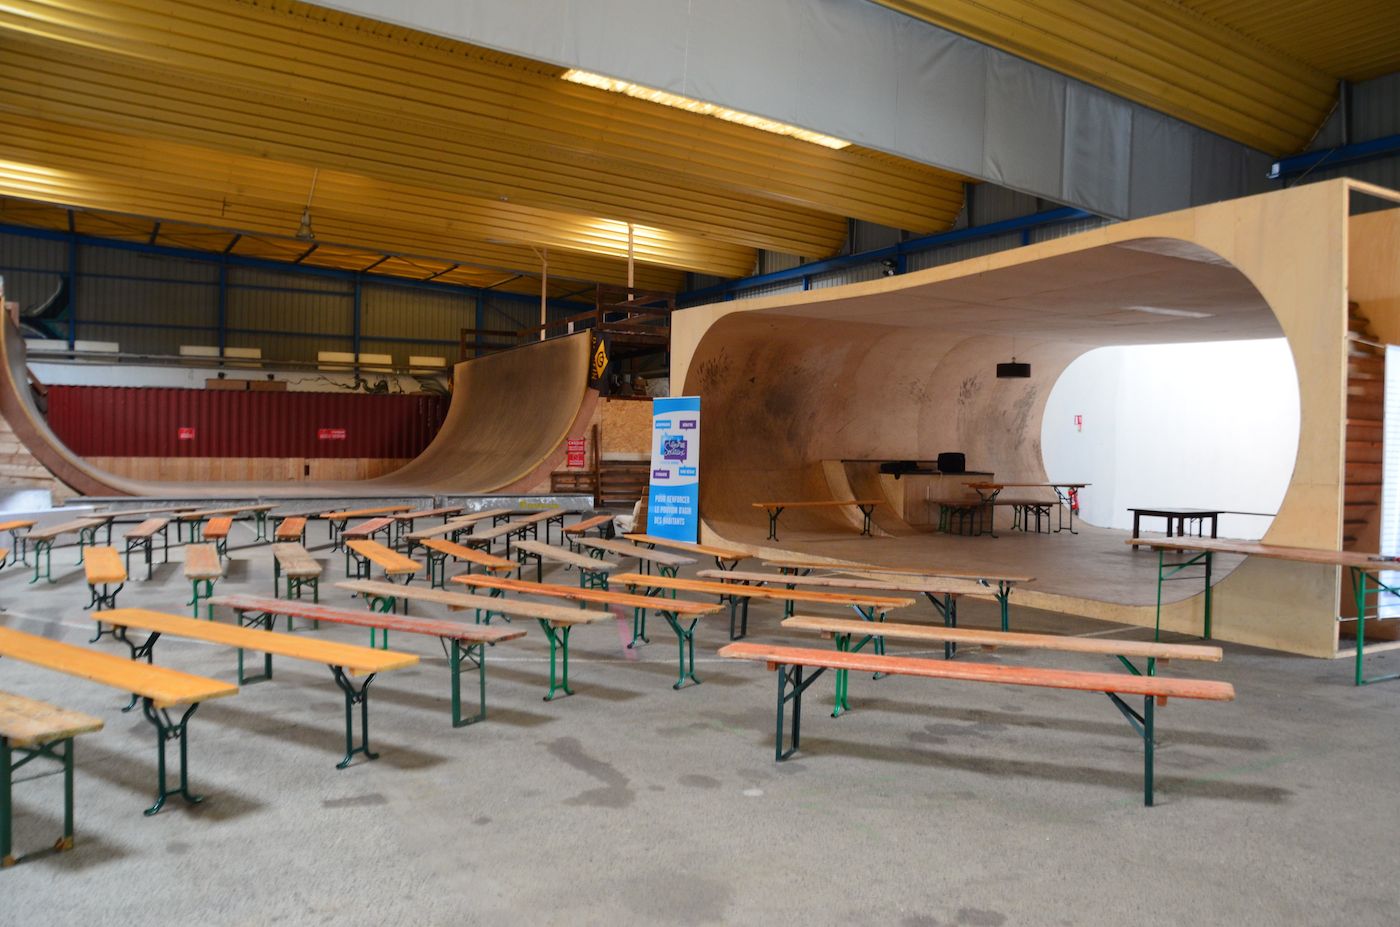 Le hangar Darwin, modulable à loisir par le brigade Planches à roulettes. http://www.hangardarwin.org